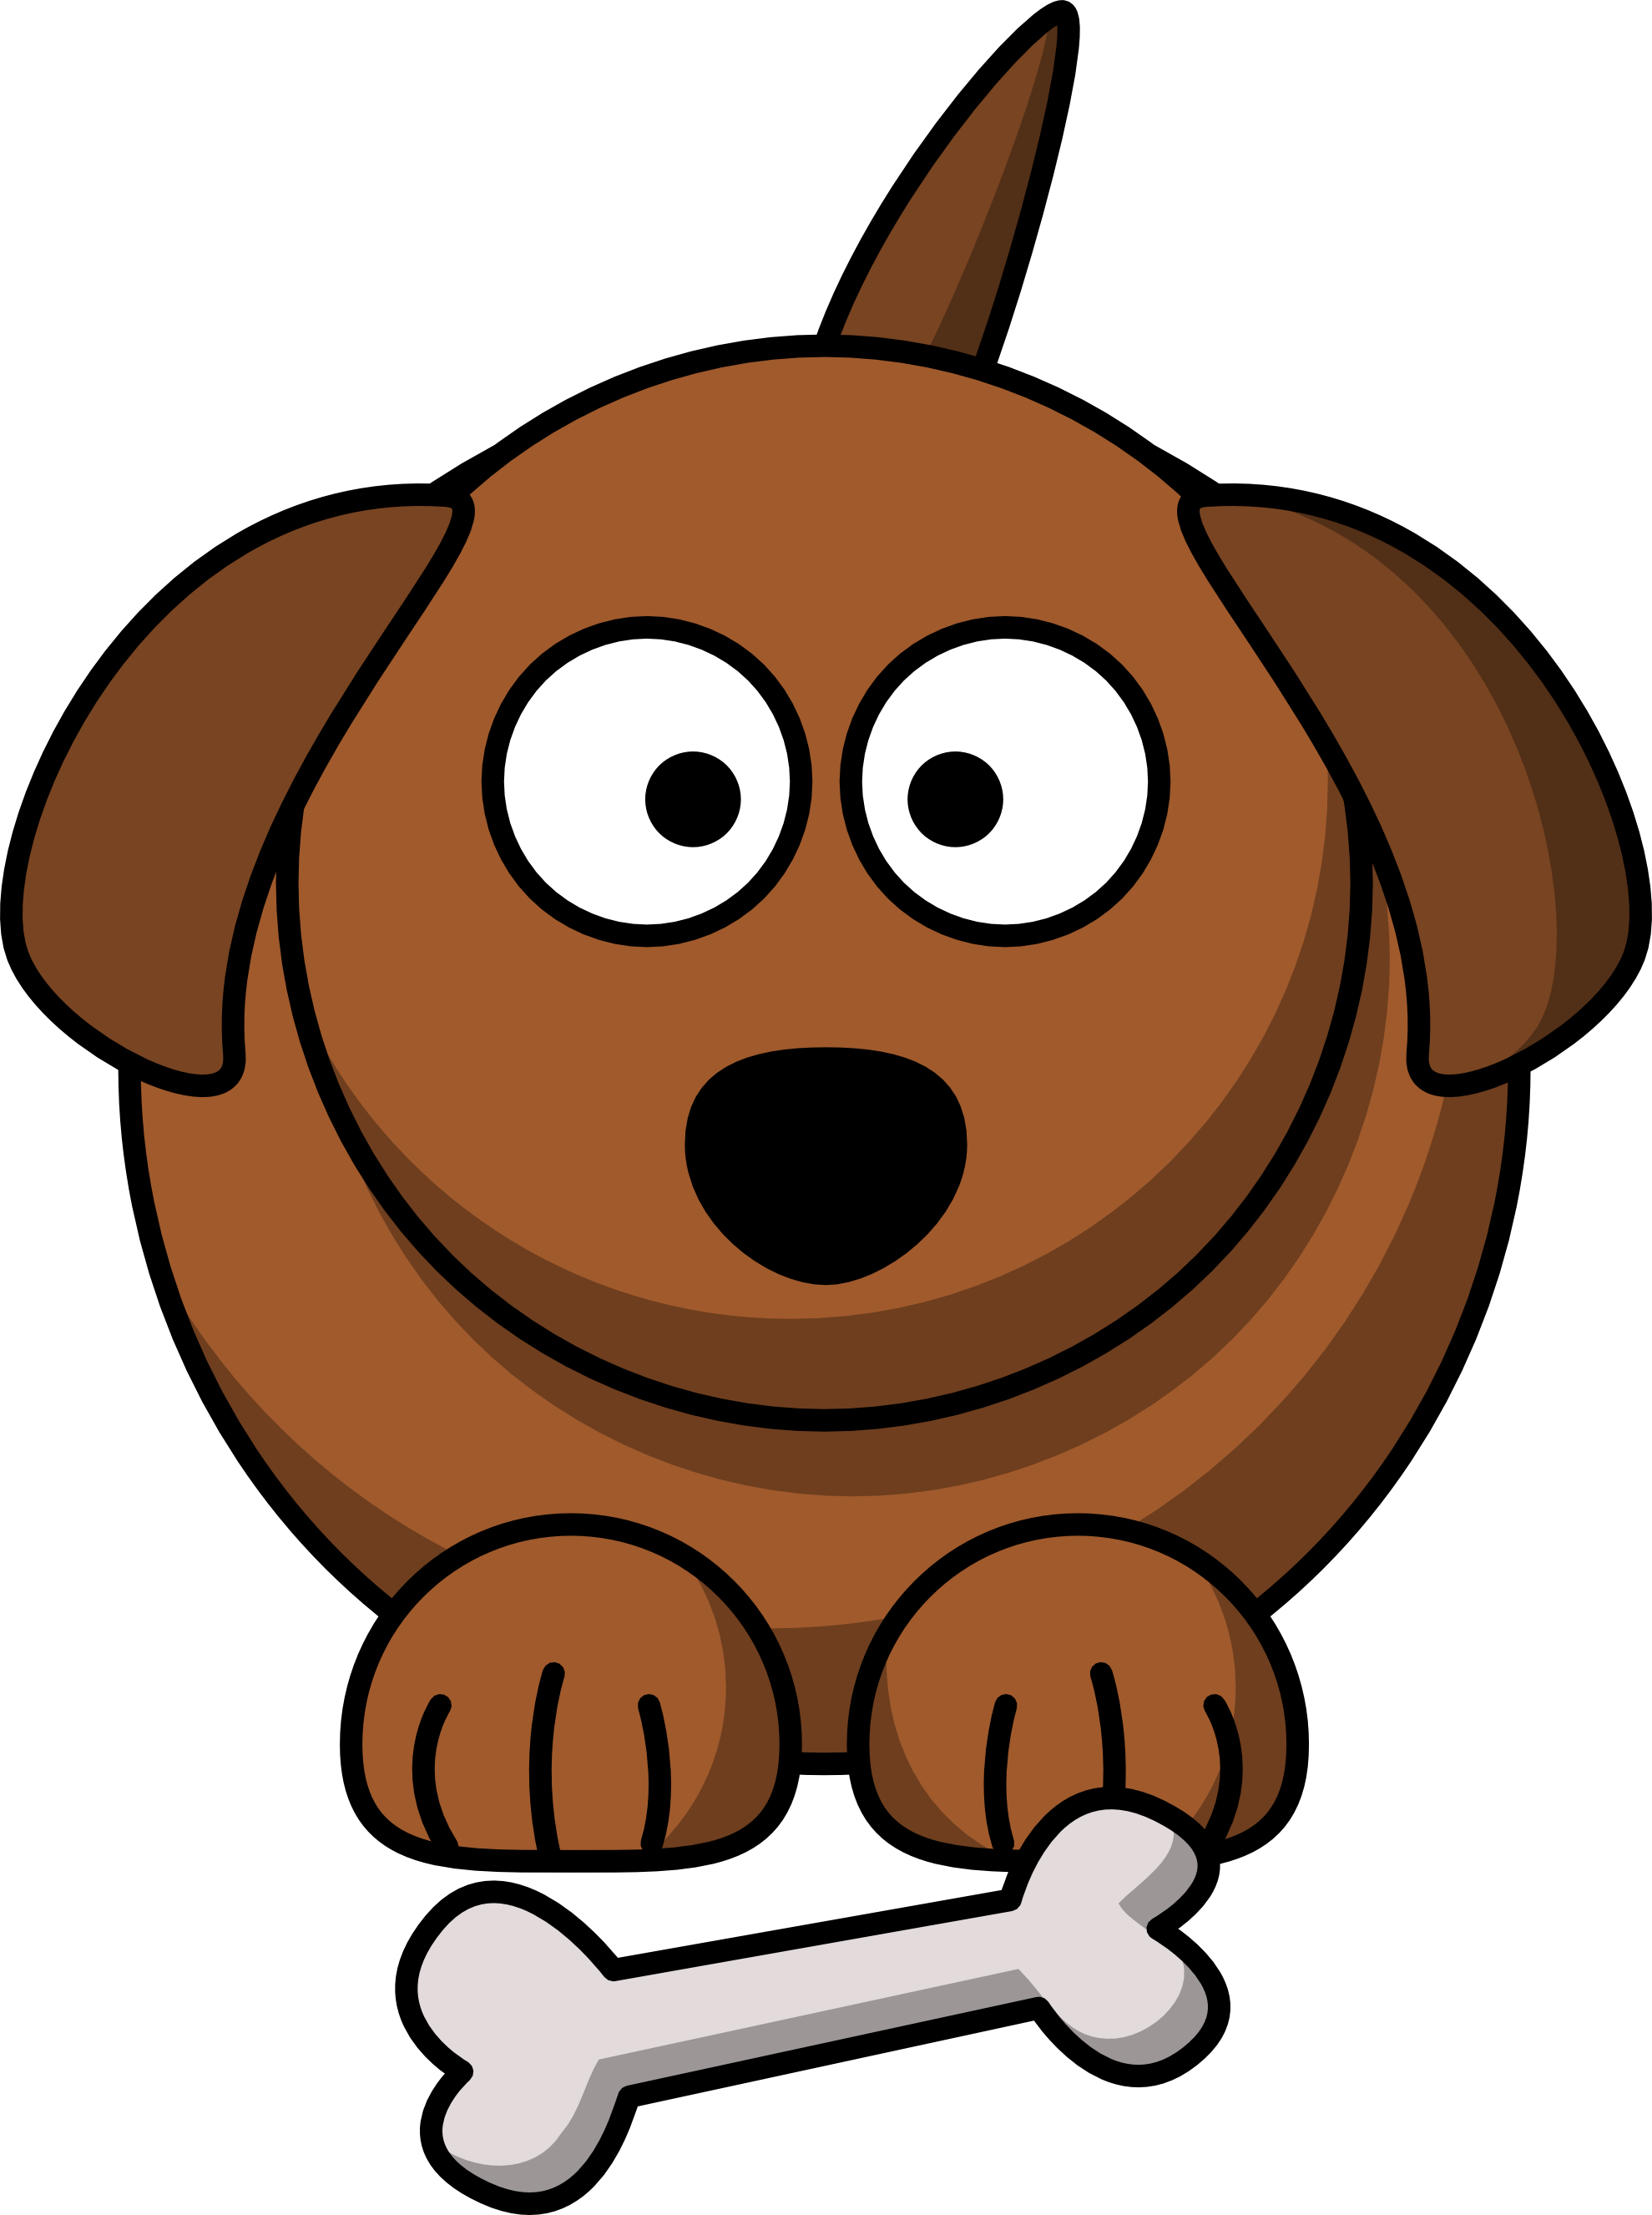 ... Dog toy clip art free cli - Free Clipart Dog